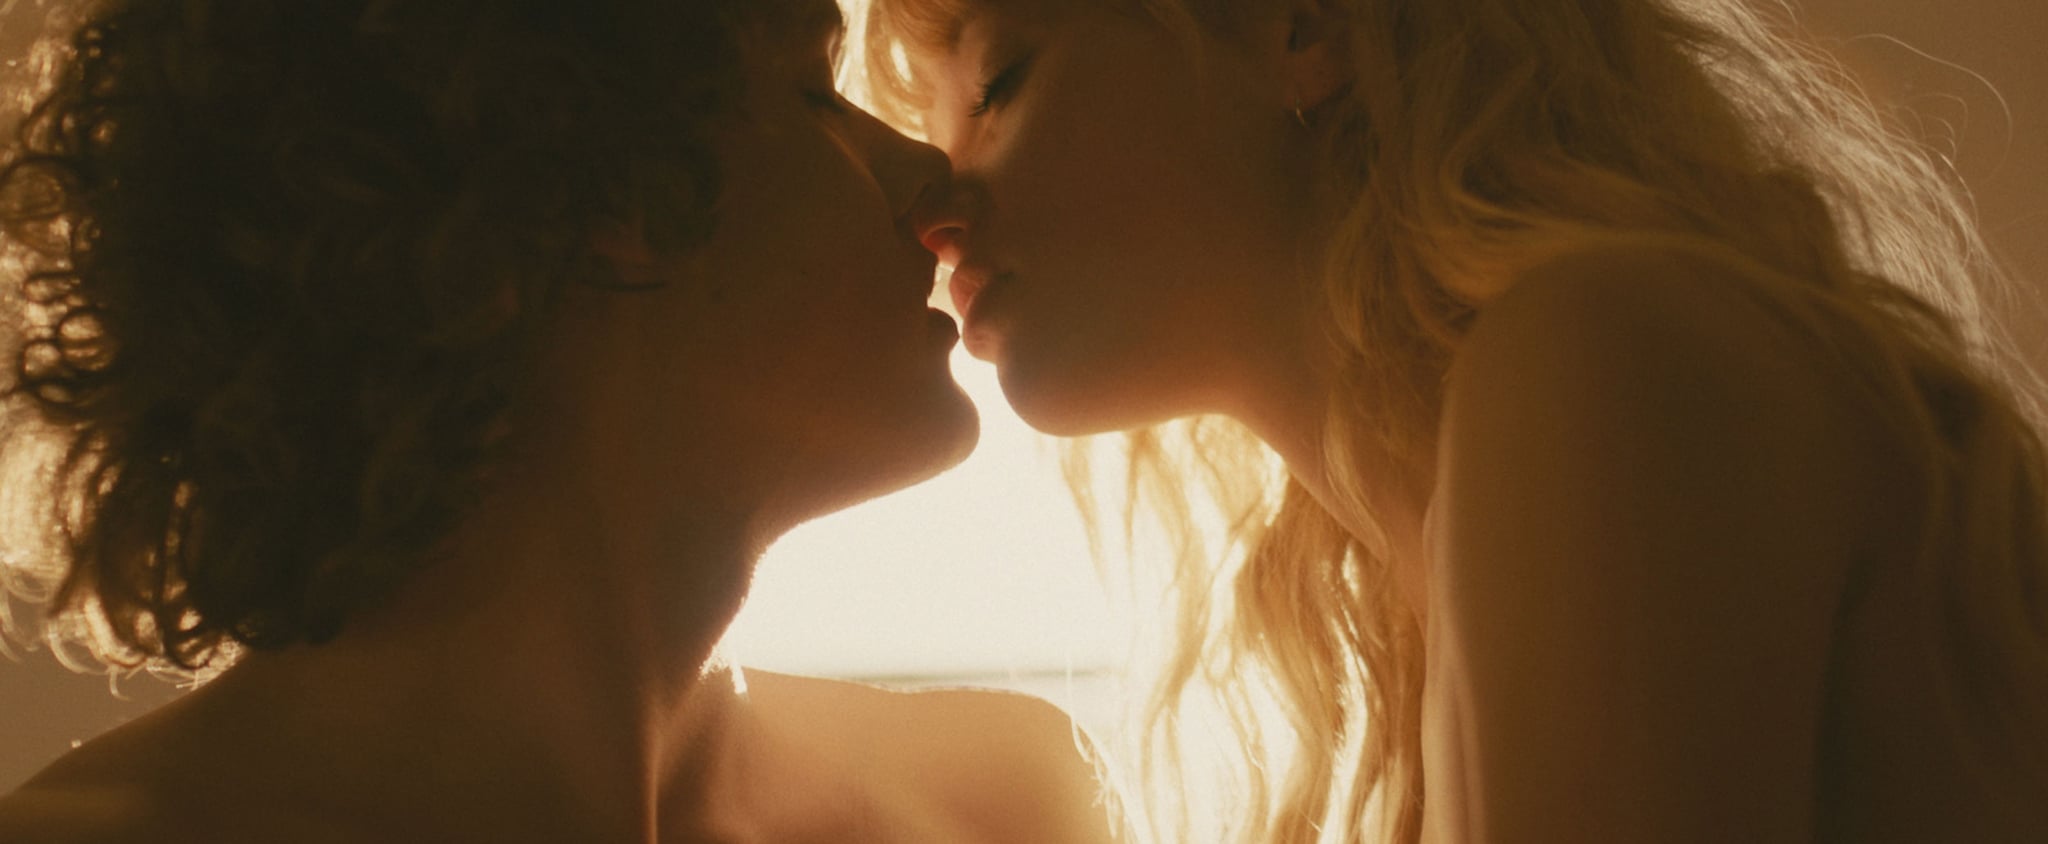 Romantic Sex Videos 14age Bays - Sexy GIFs From Tumblr | POPSUGAR Love & Sex